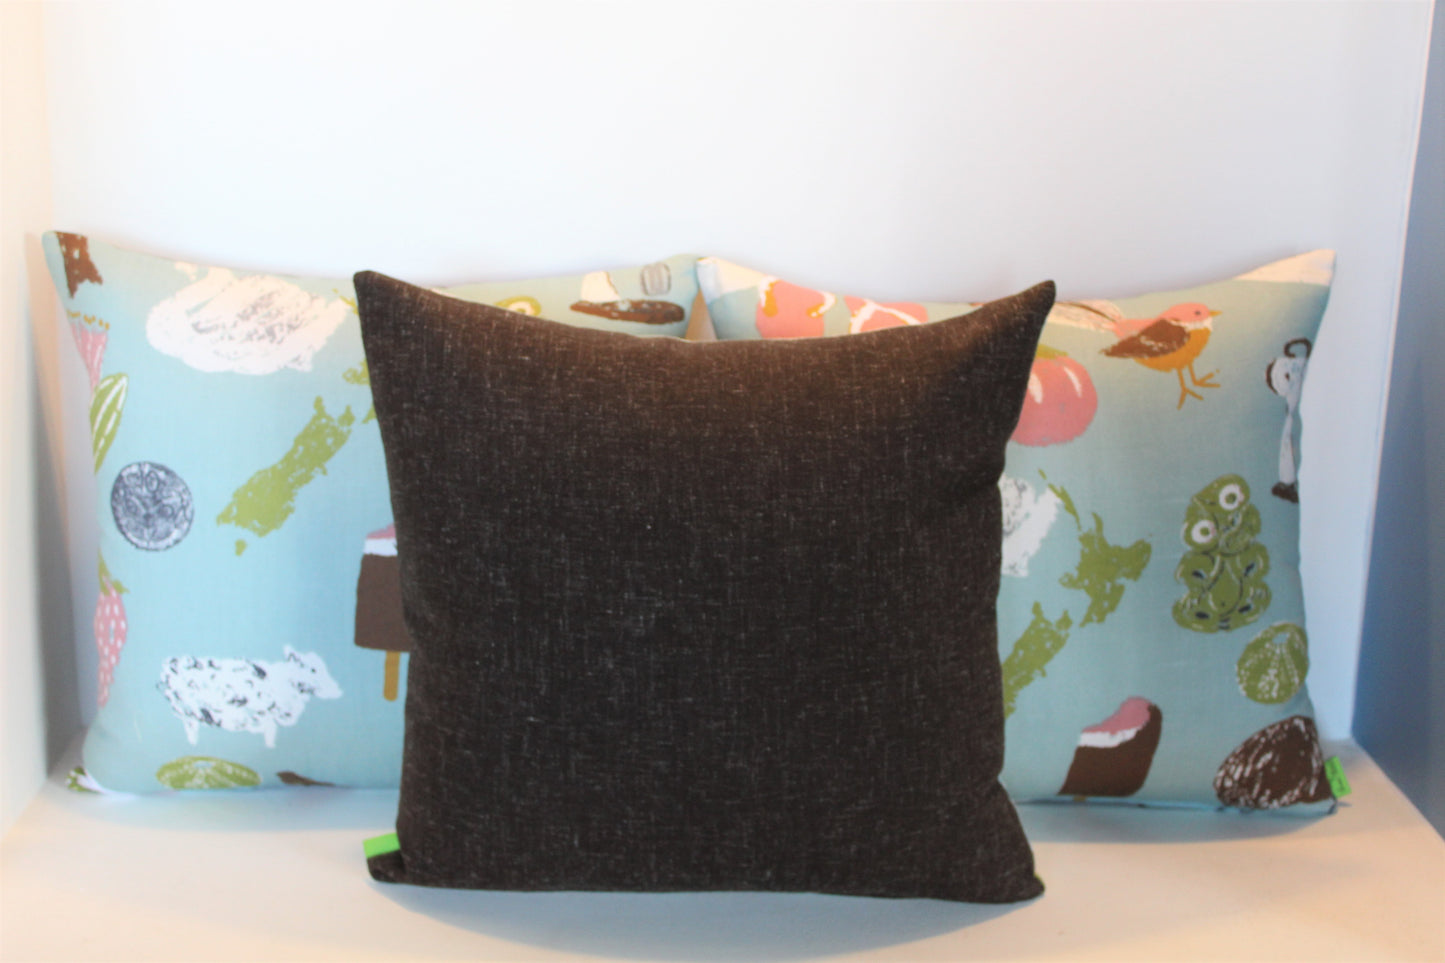 Kiwi Summer Blue & Pink - Cushion Cover - 48cm x 45cm